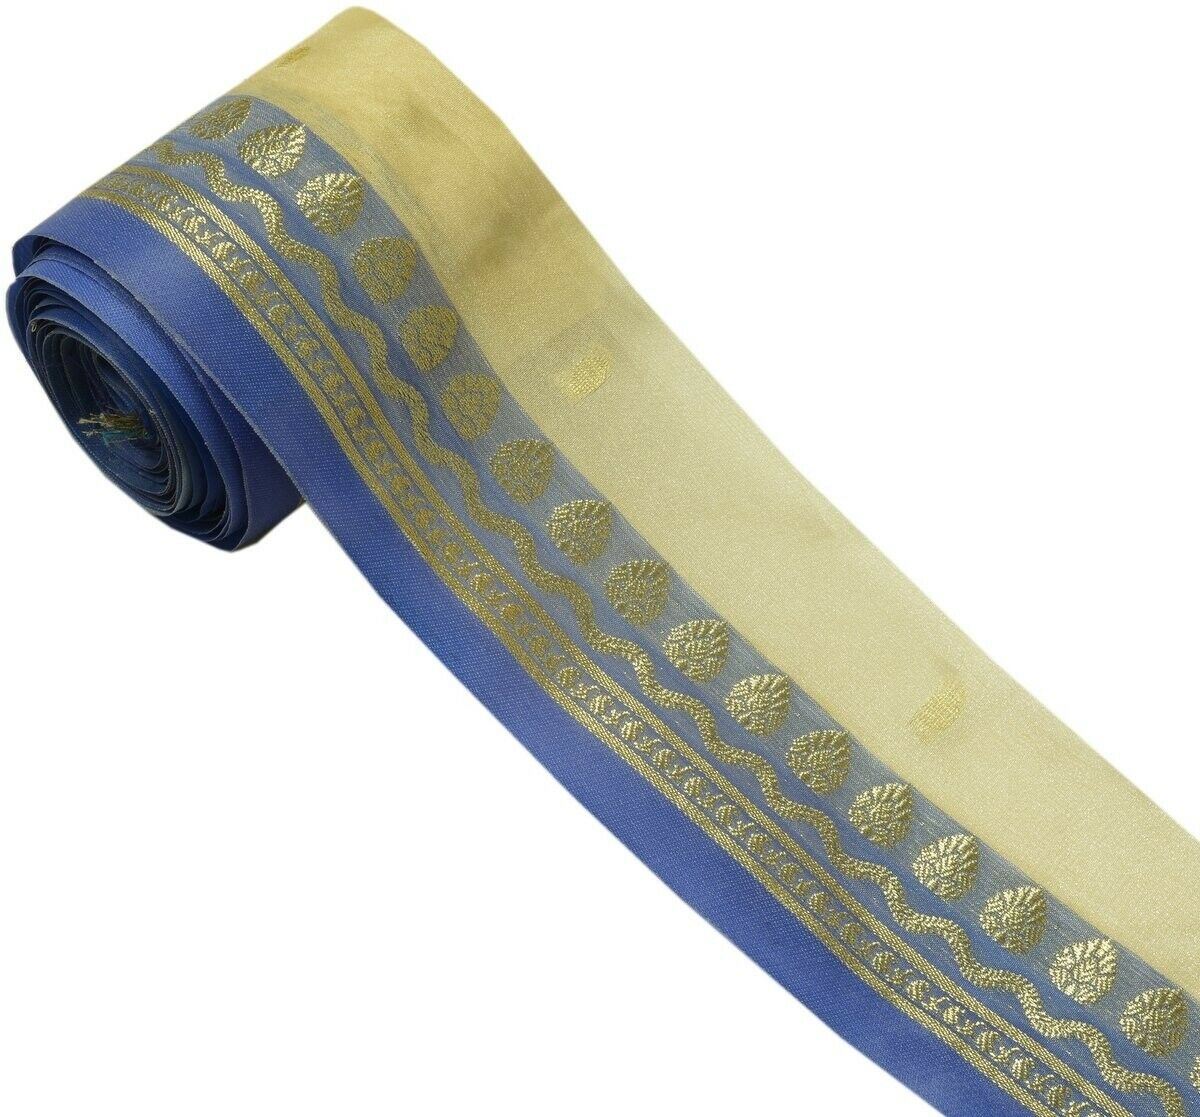 Vintage Sari Border Indian Craft Trim Zari Woven Blue Cream Sewing Ribbon Lace